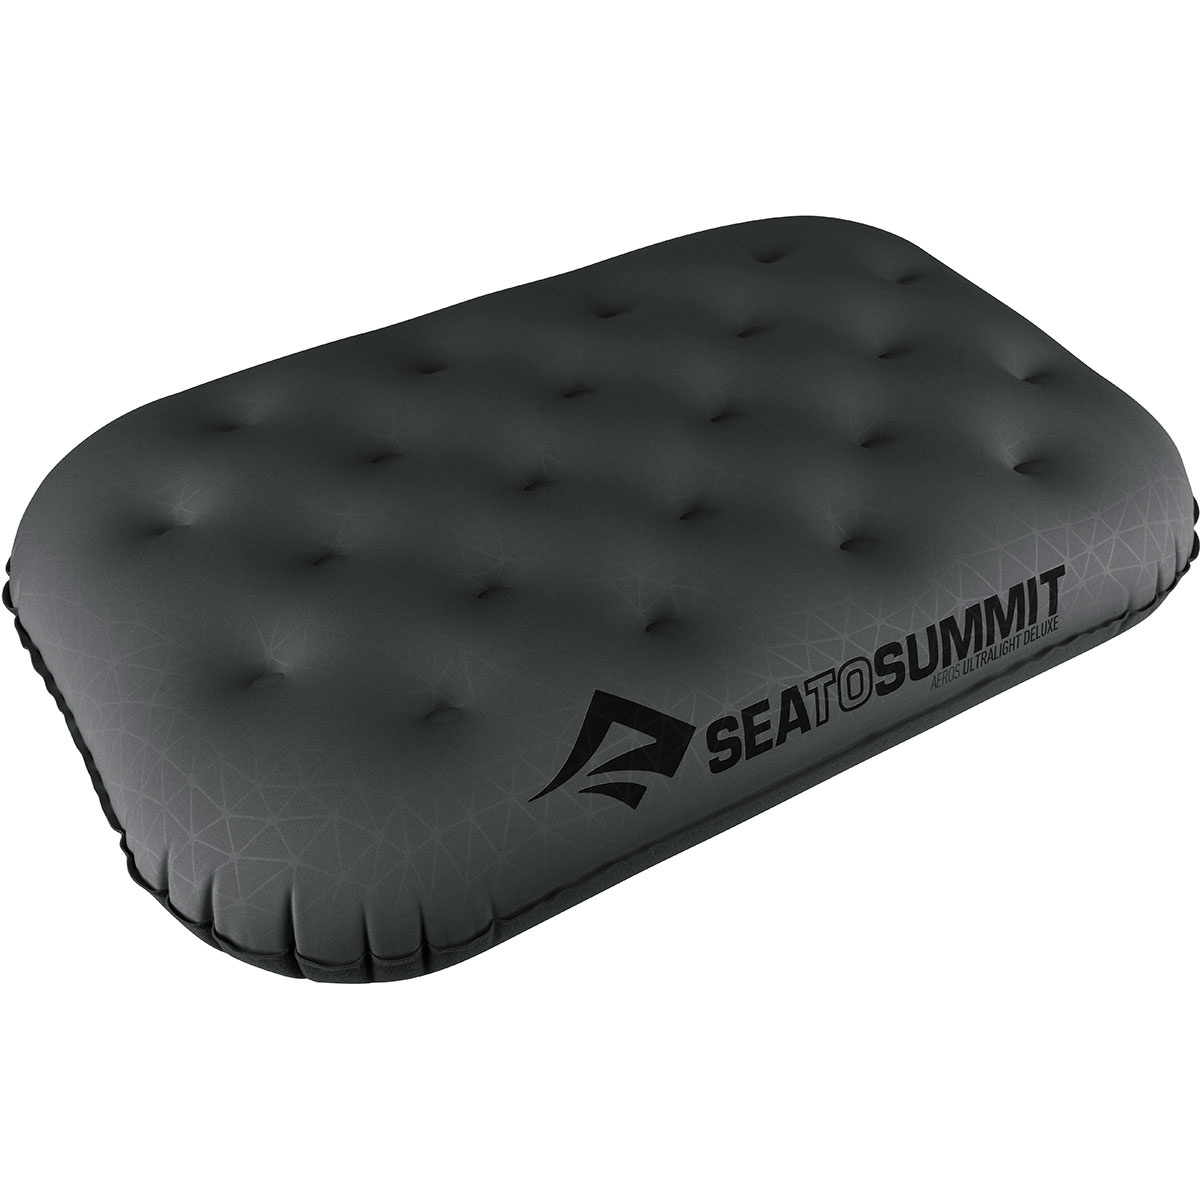 Image of Sea to Summit Cuscino Aeros Ultralight Deluxe Pillow